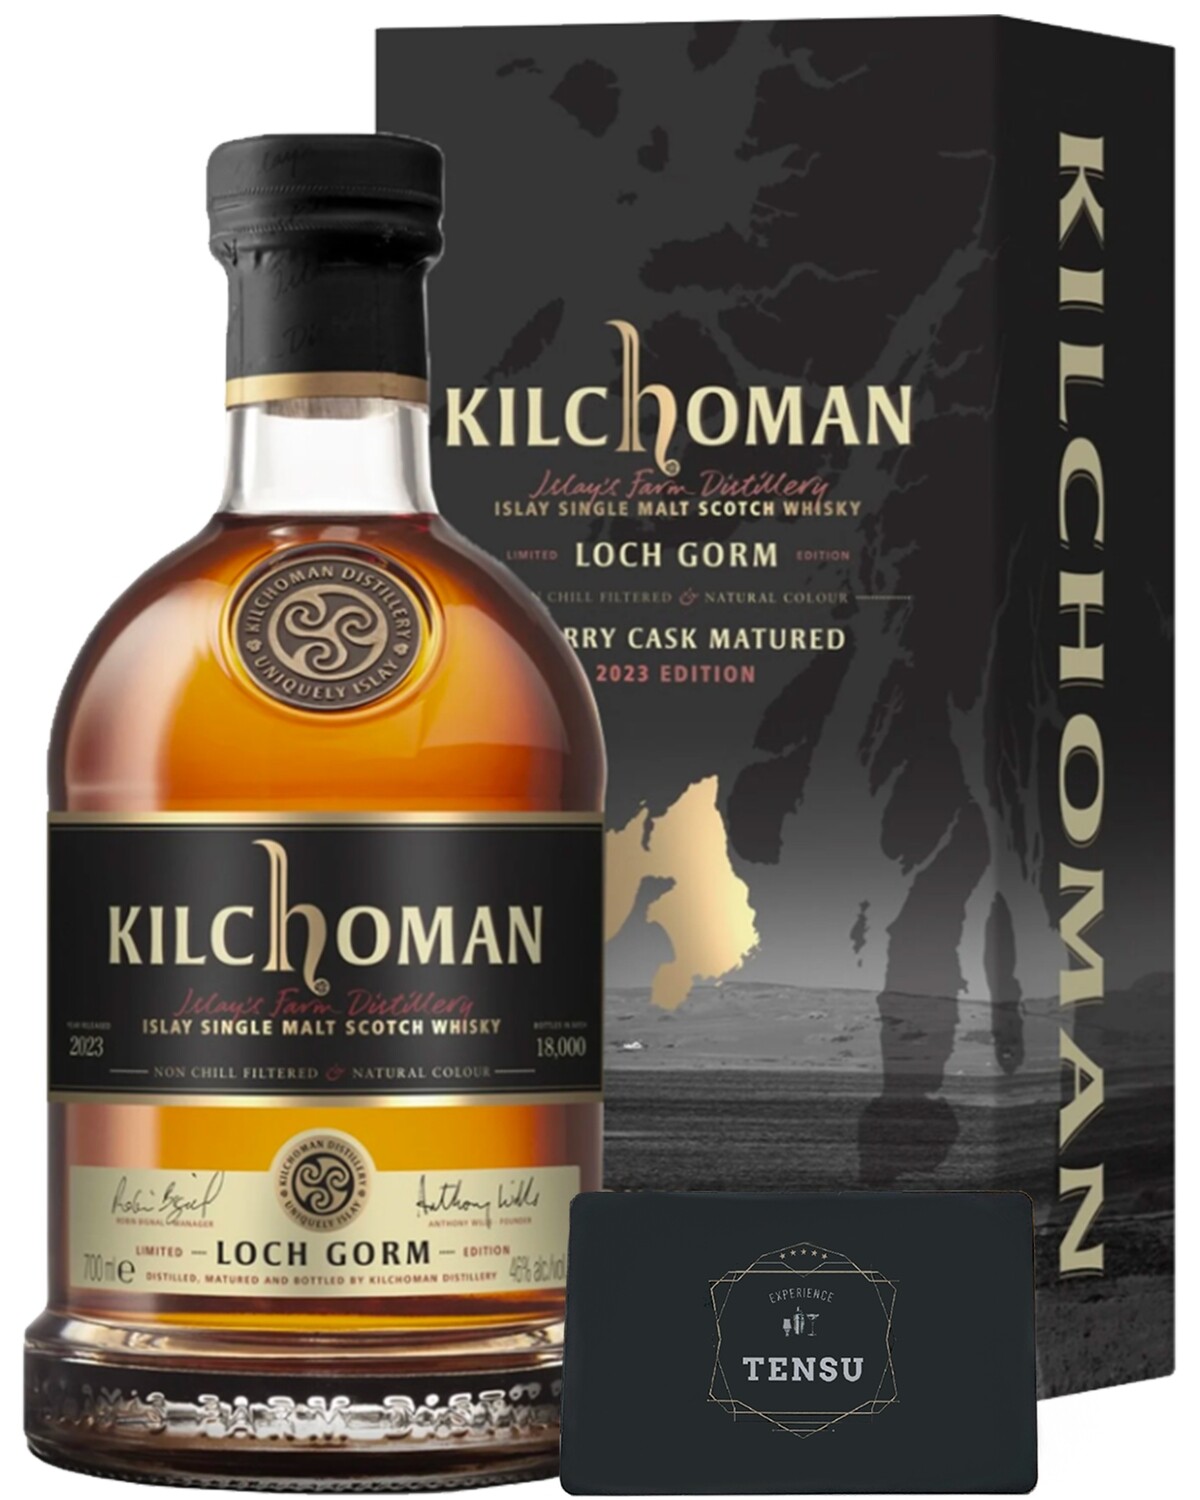 Kilchoman Loch Gorm (2023) 46.0 "OB"